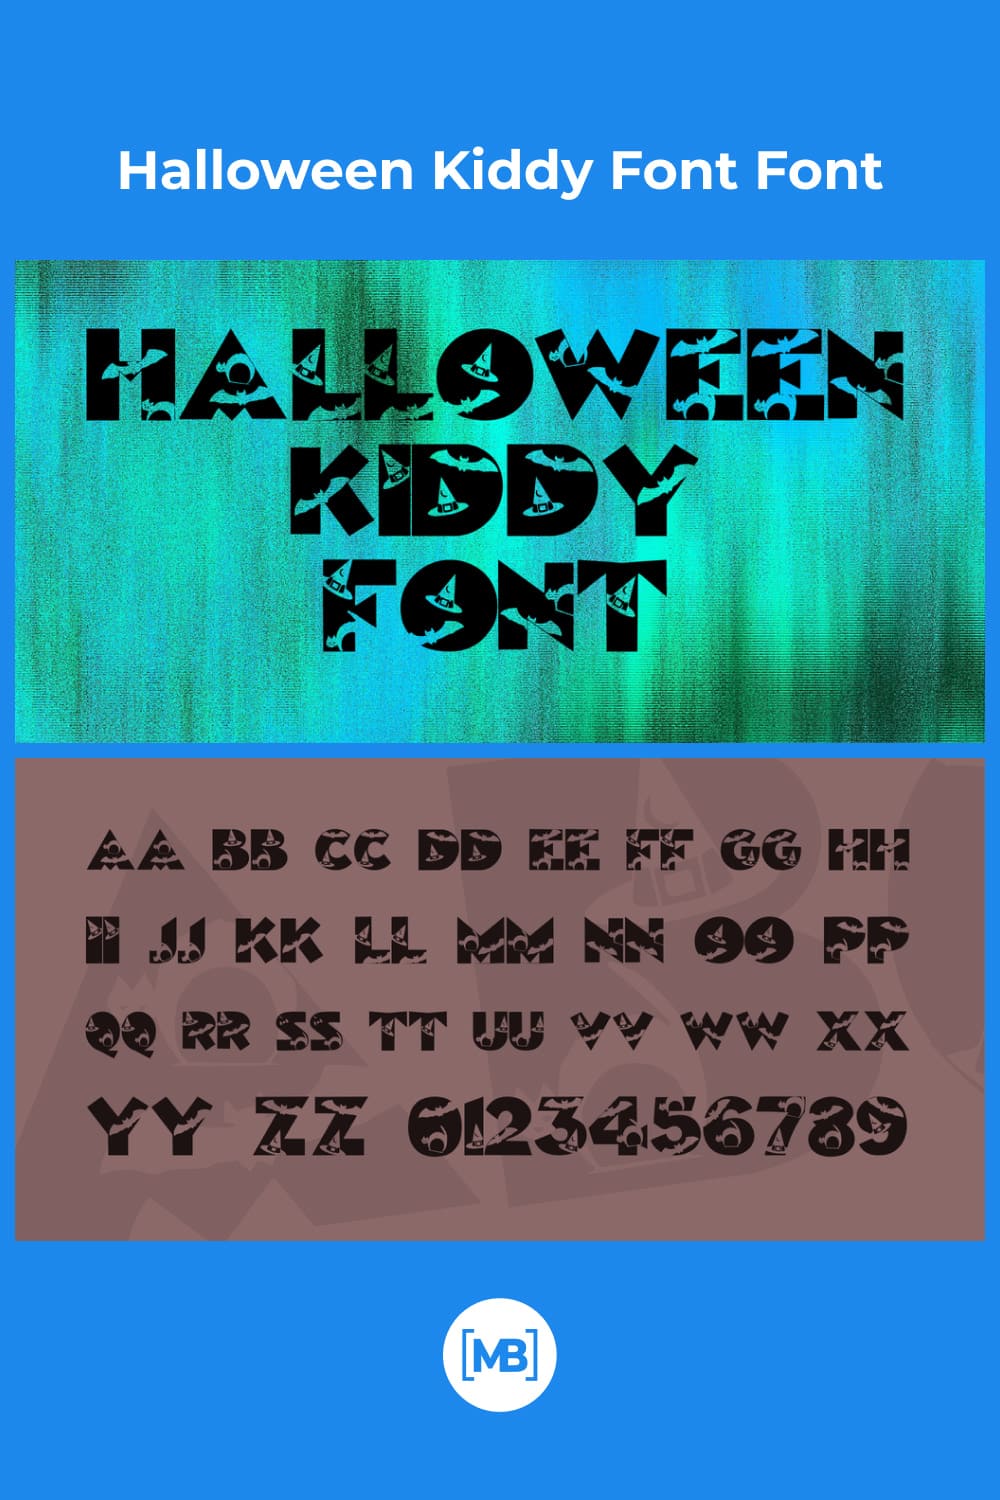 15 Halloween Kiddy Font Font